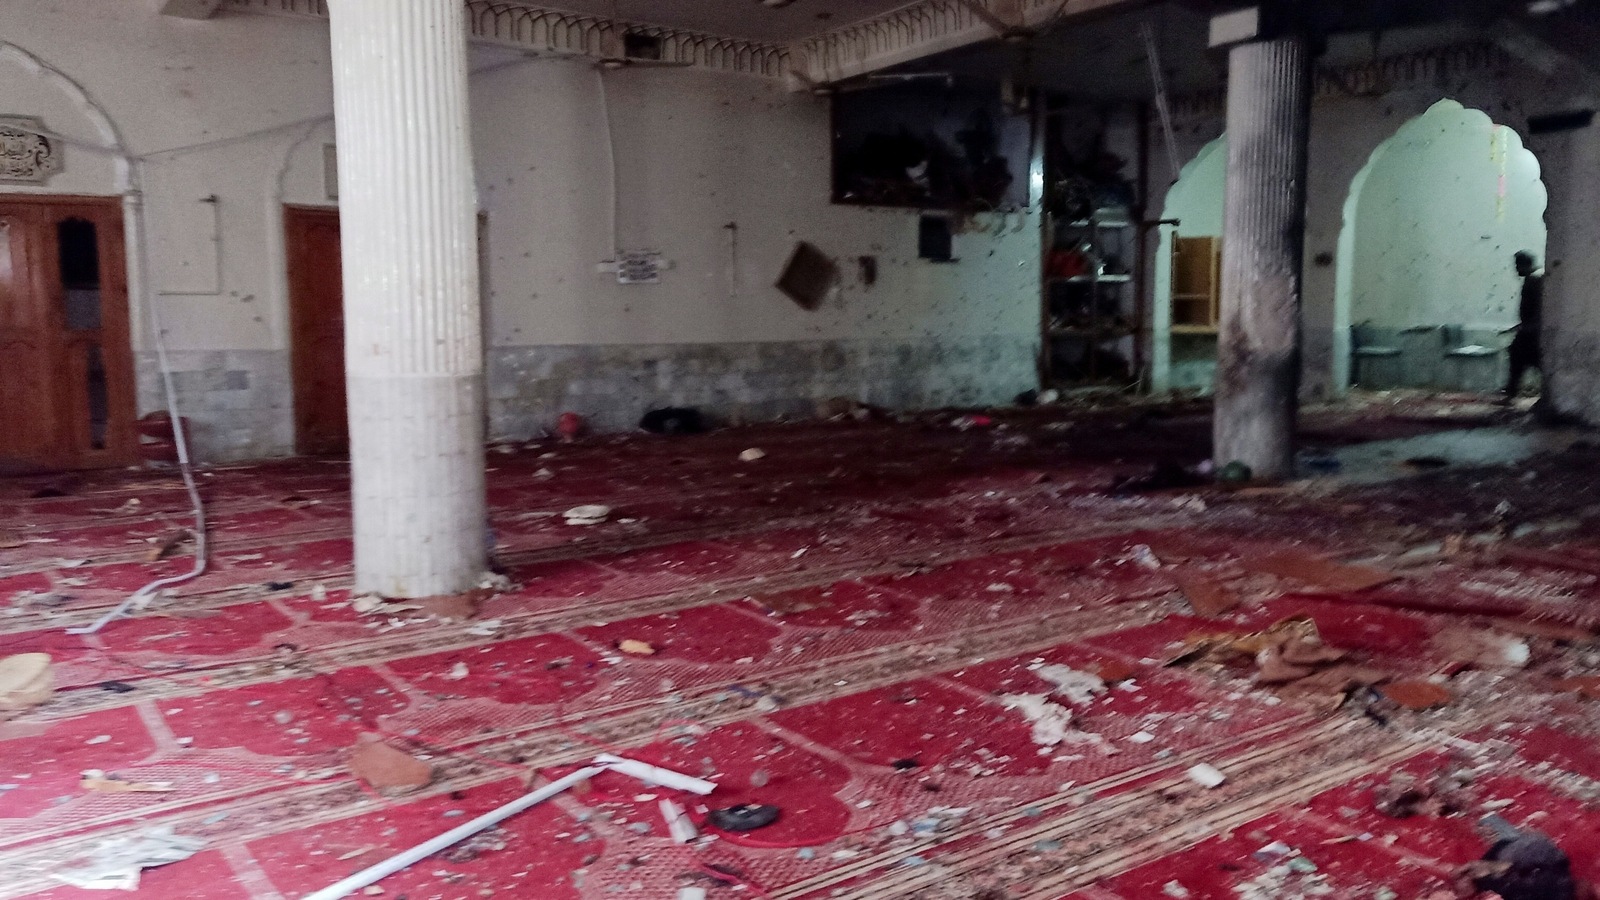 30 killed, 50 injured in major bomb blast inside Peshawar mosque during  prayer | World News - Hindustan Times